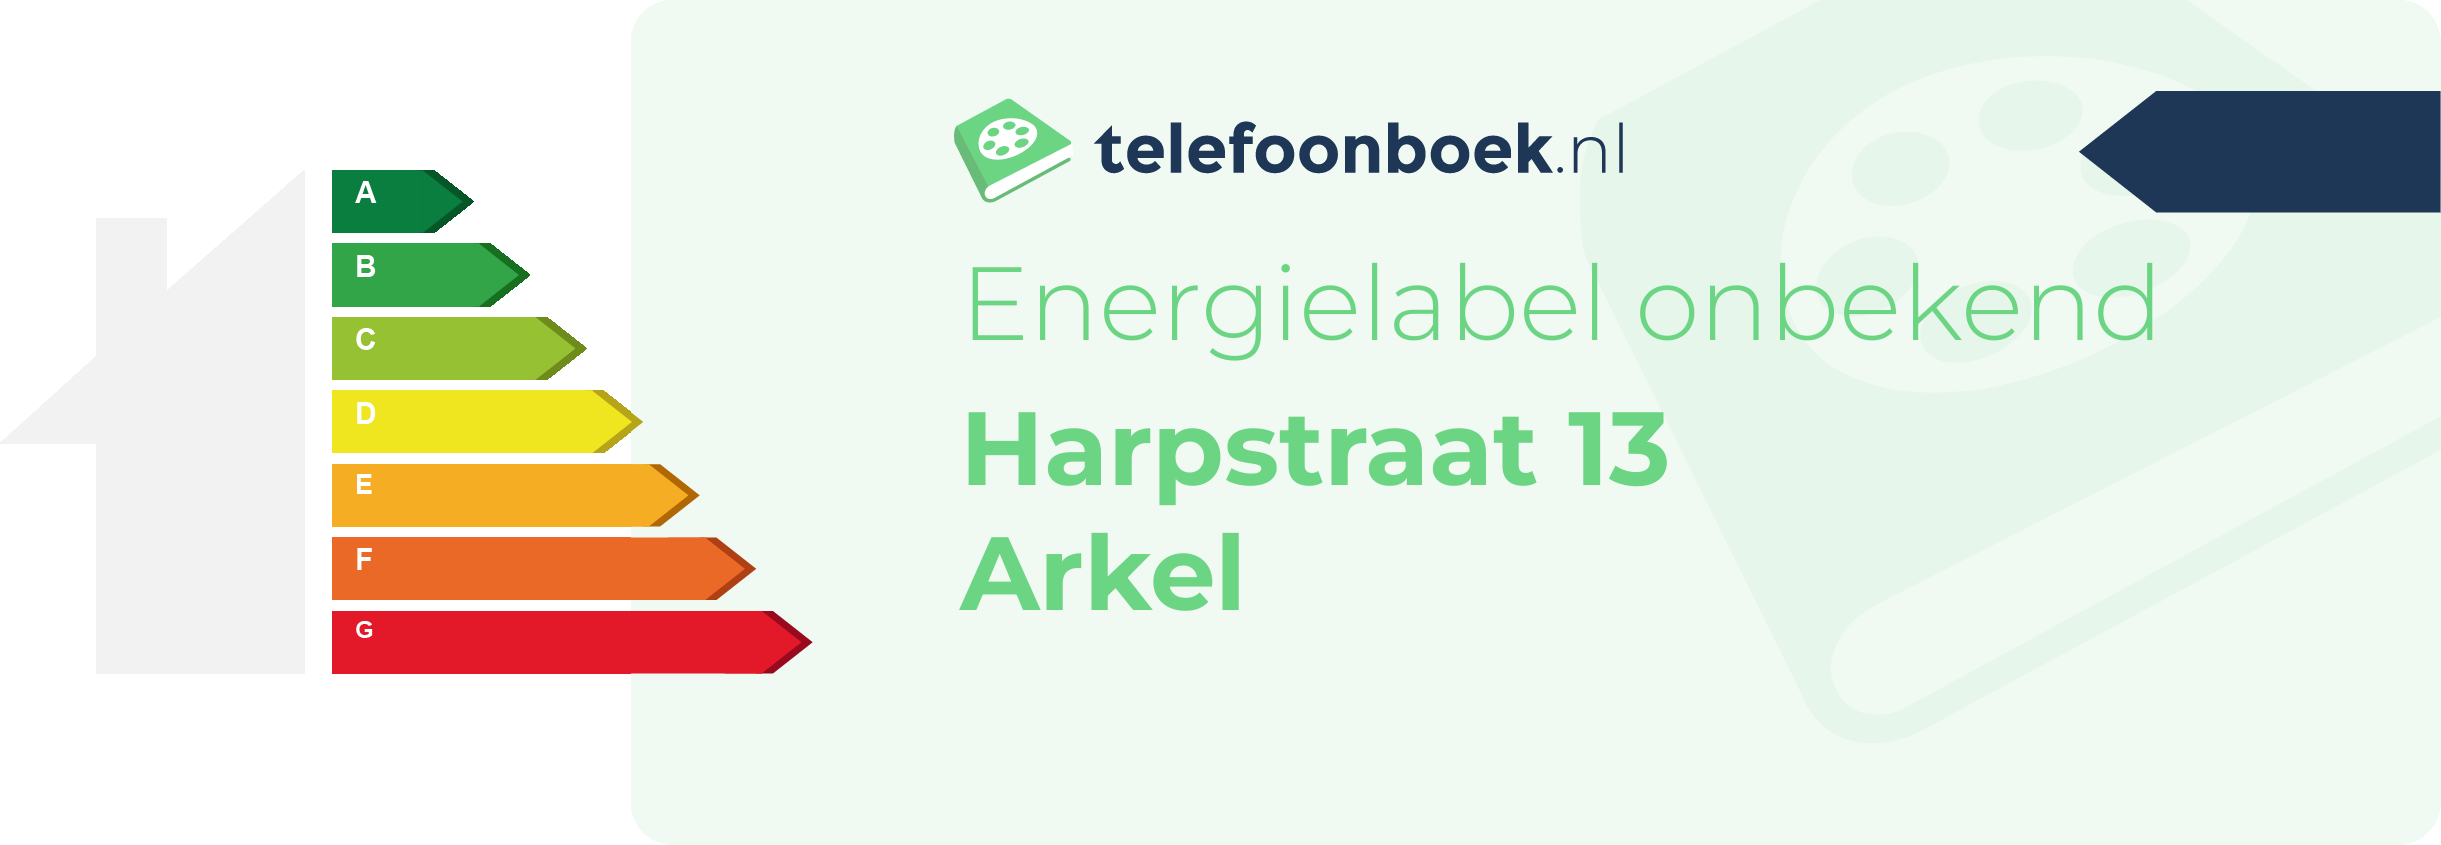 Energielabel Harpstraat 13 Arkel